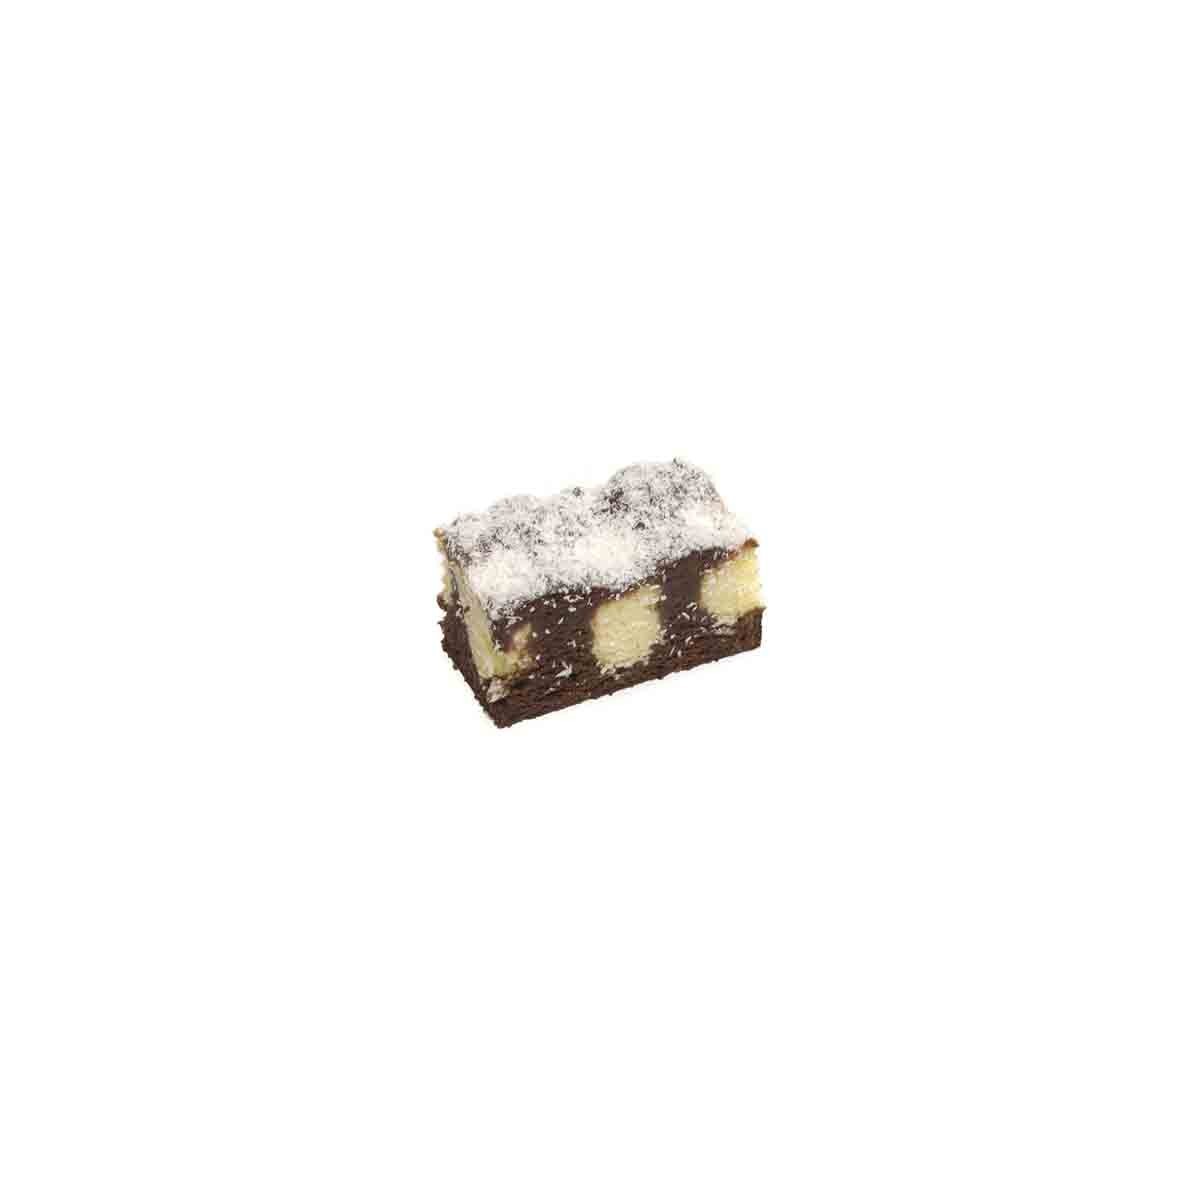 VAMIX B639C21  COCONUT CHOCOLATE CAKE BAKED 3X2,5KG  BOX